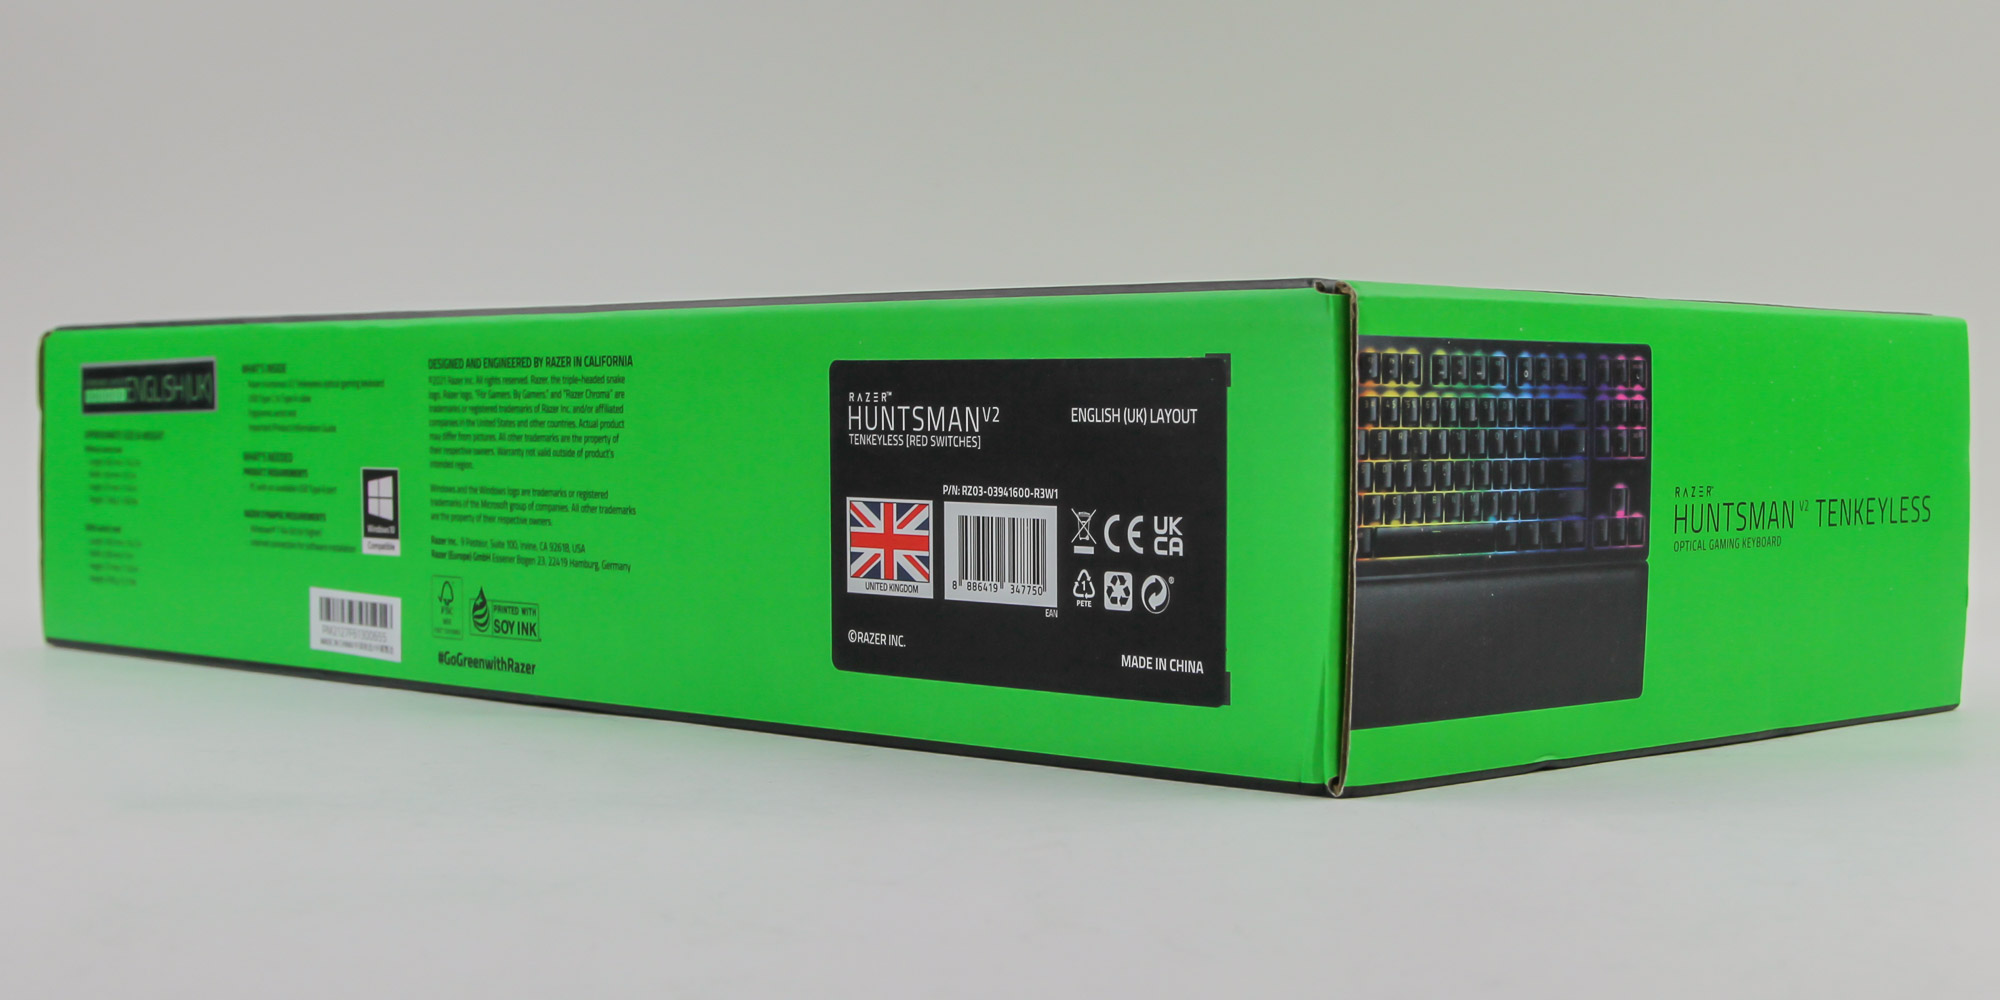 Razer Huntsman V2 Tenkeyless Optical Gaming Keyboard Review - Packaging &  Accessories | TechPowerUp